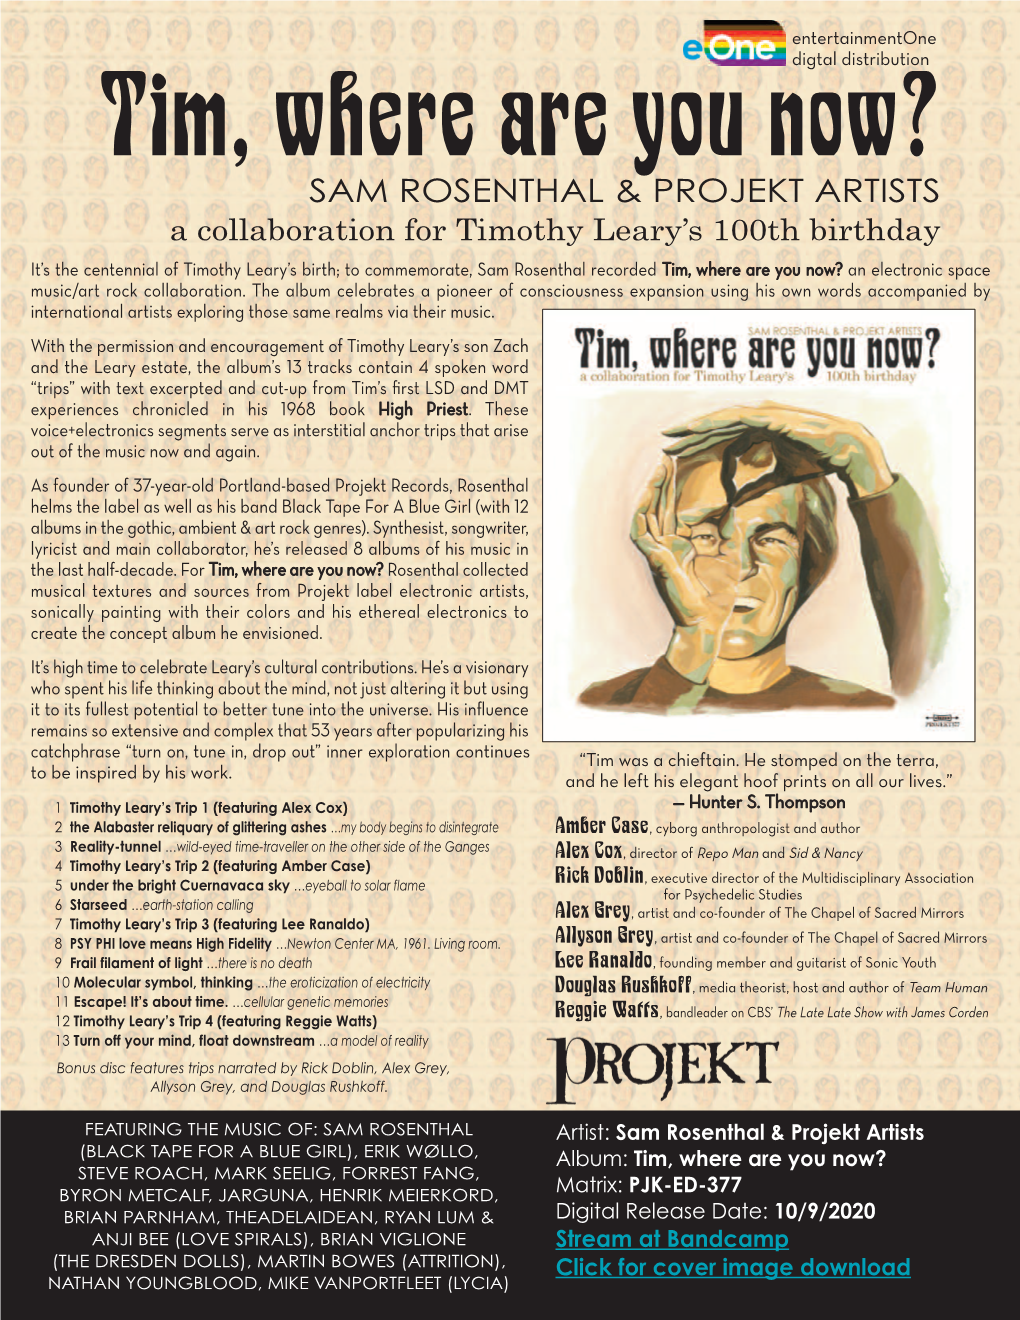 Sam Rosenthal & Projekt Artists